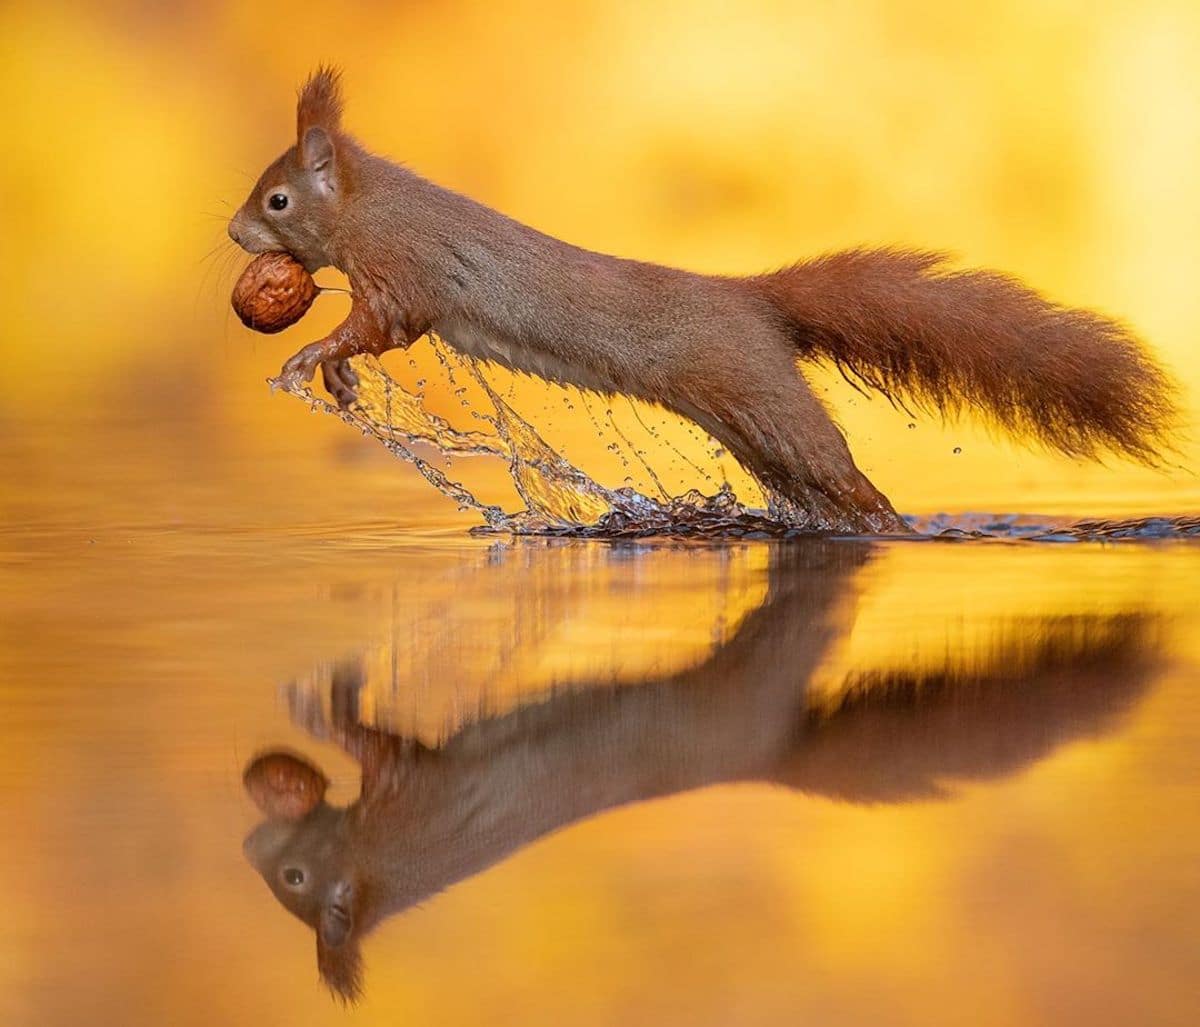 Red Squirrel Photography by Dick van Duijn